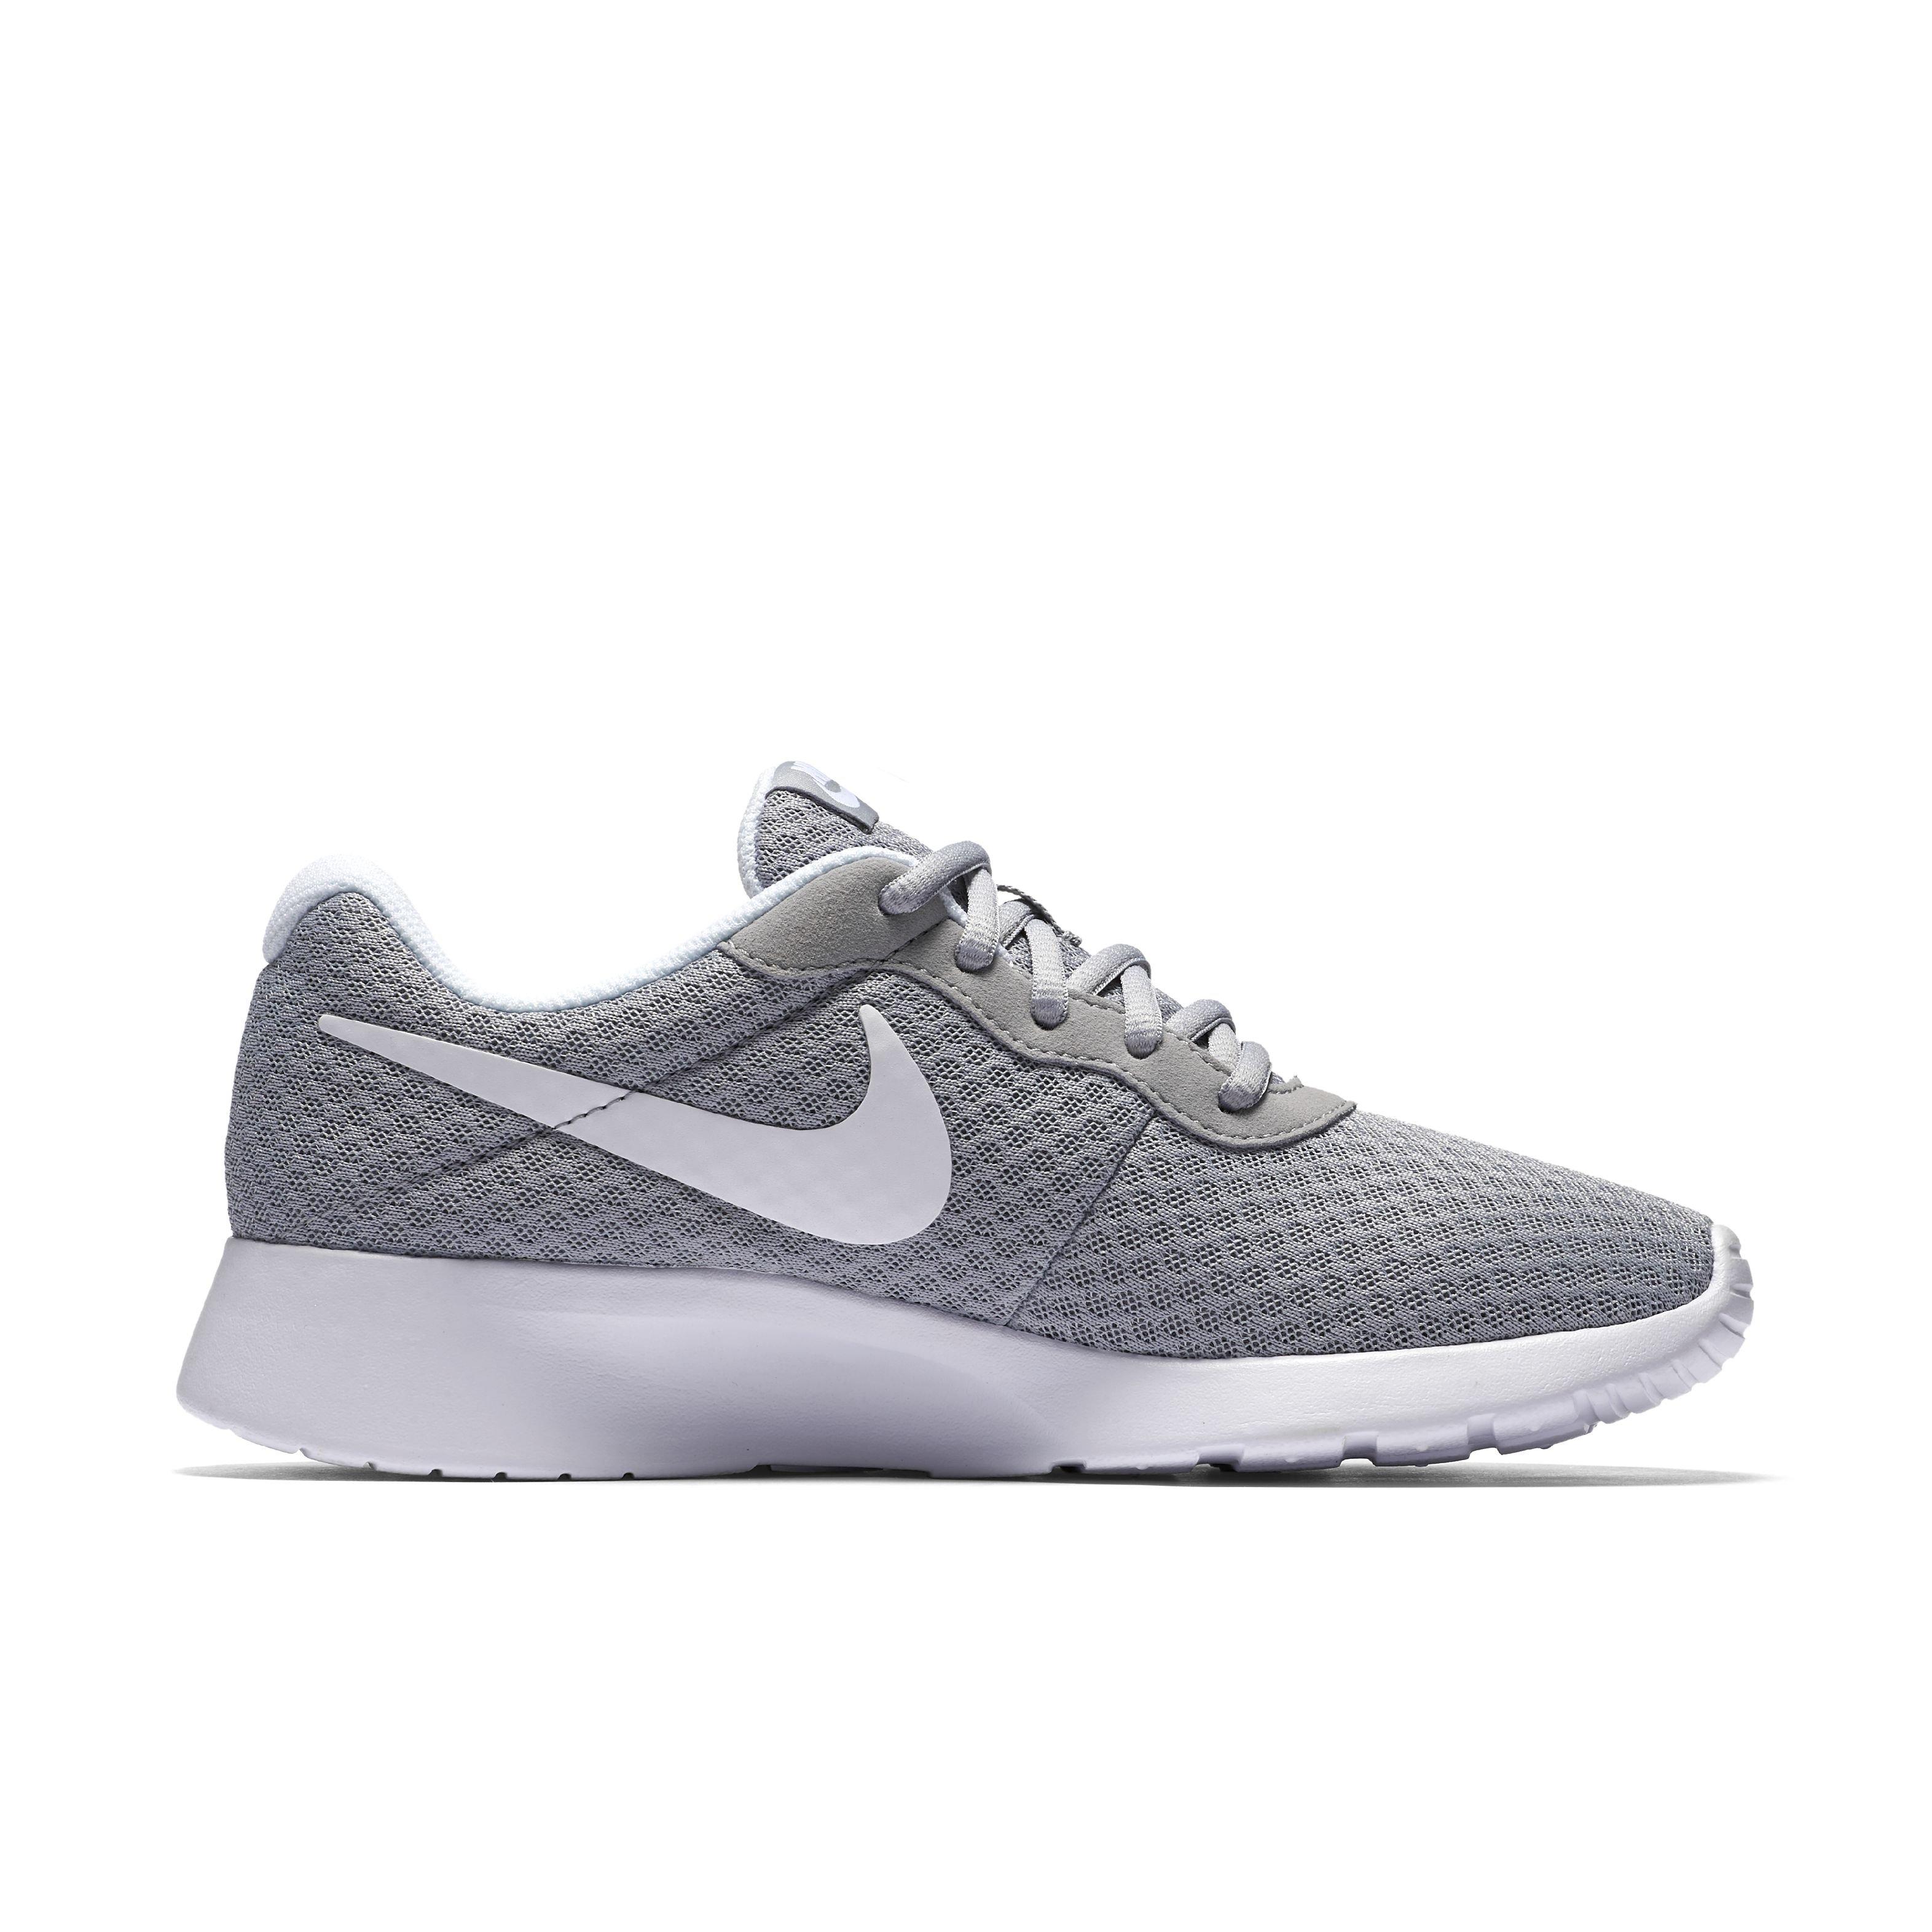 Nike "Wolf Grey/White" Shoe